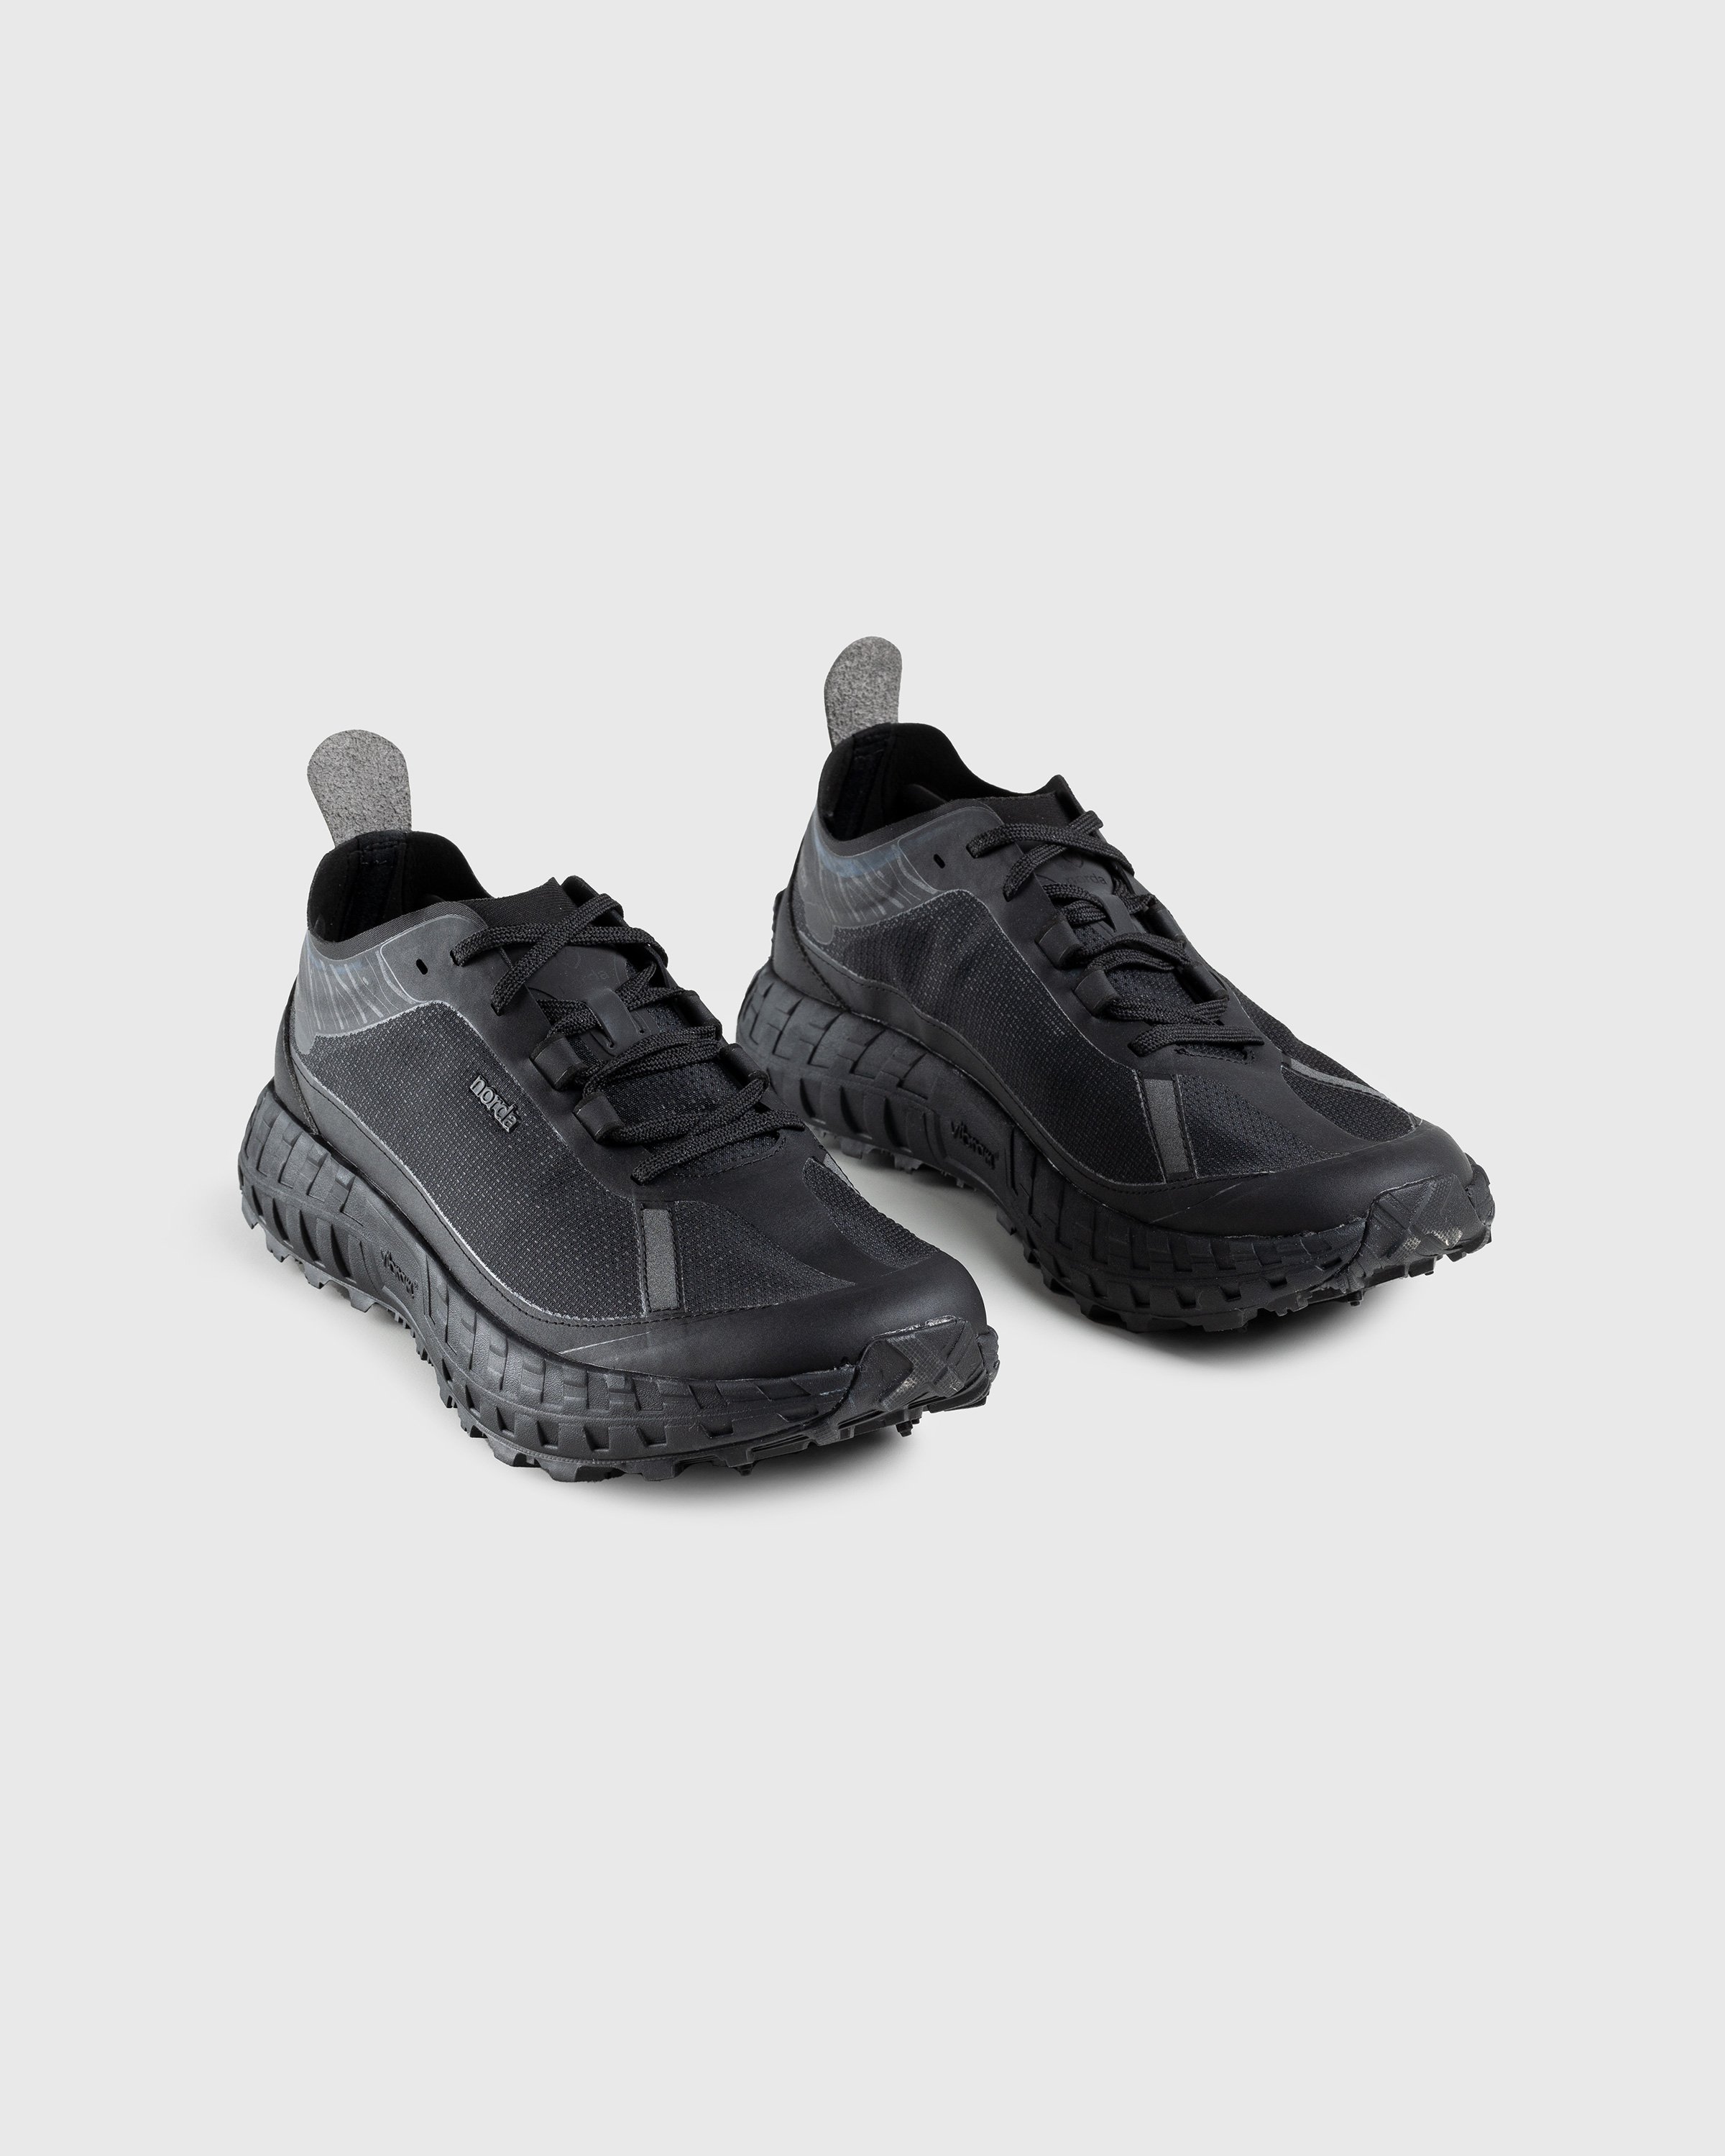 Norda - 001 LTD Edition G+ Graphene Black - Footwear - Black - Image 3